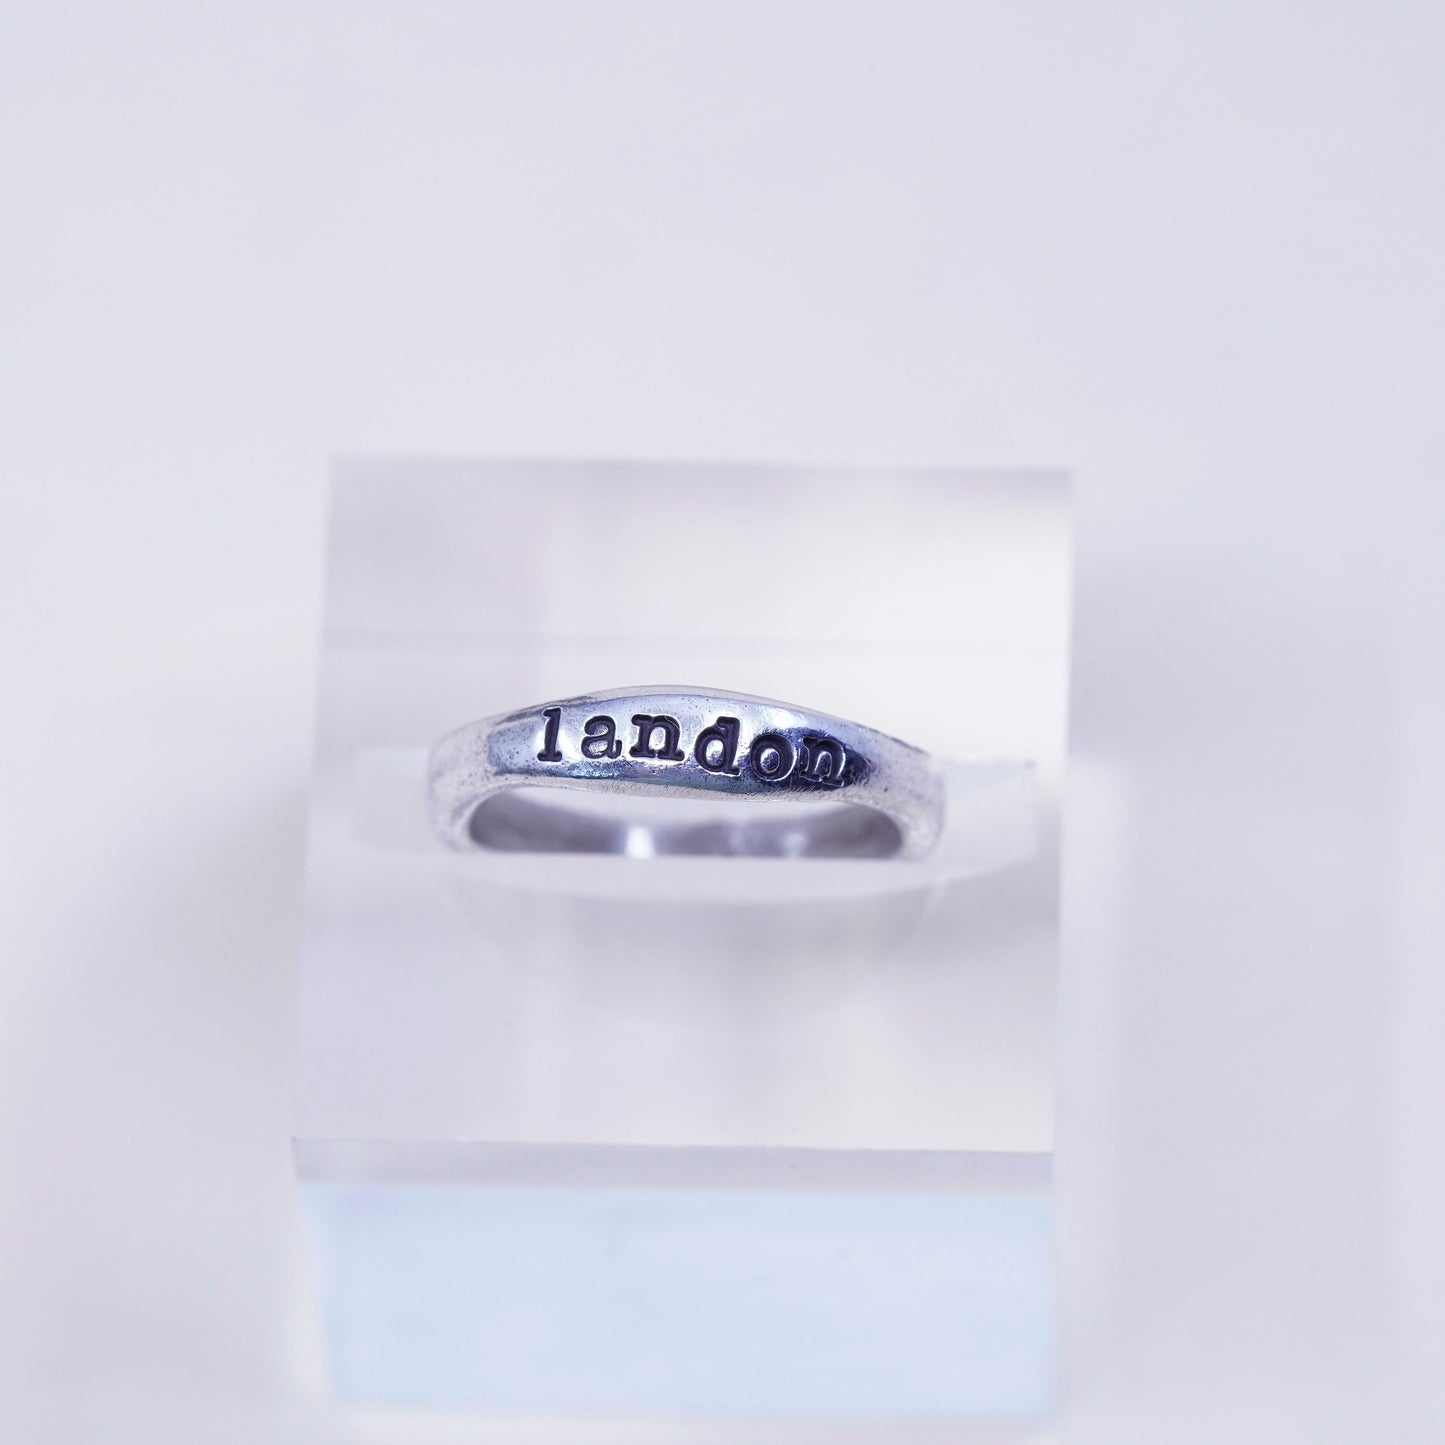 Size 6.5, Vintage sterling silver ring, 925 stackable band, engraved “Landon”